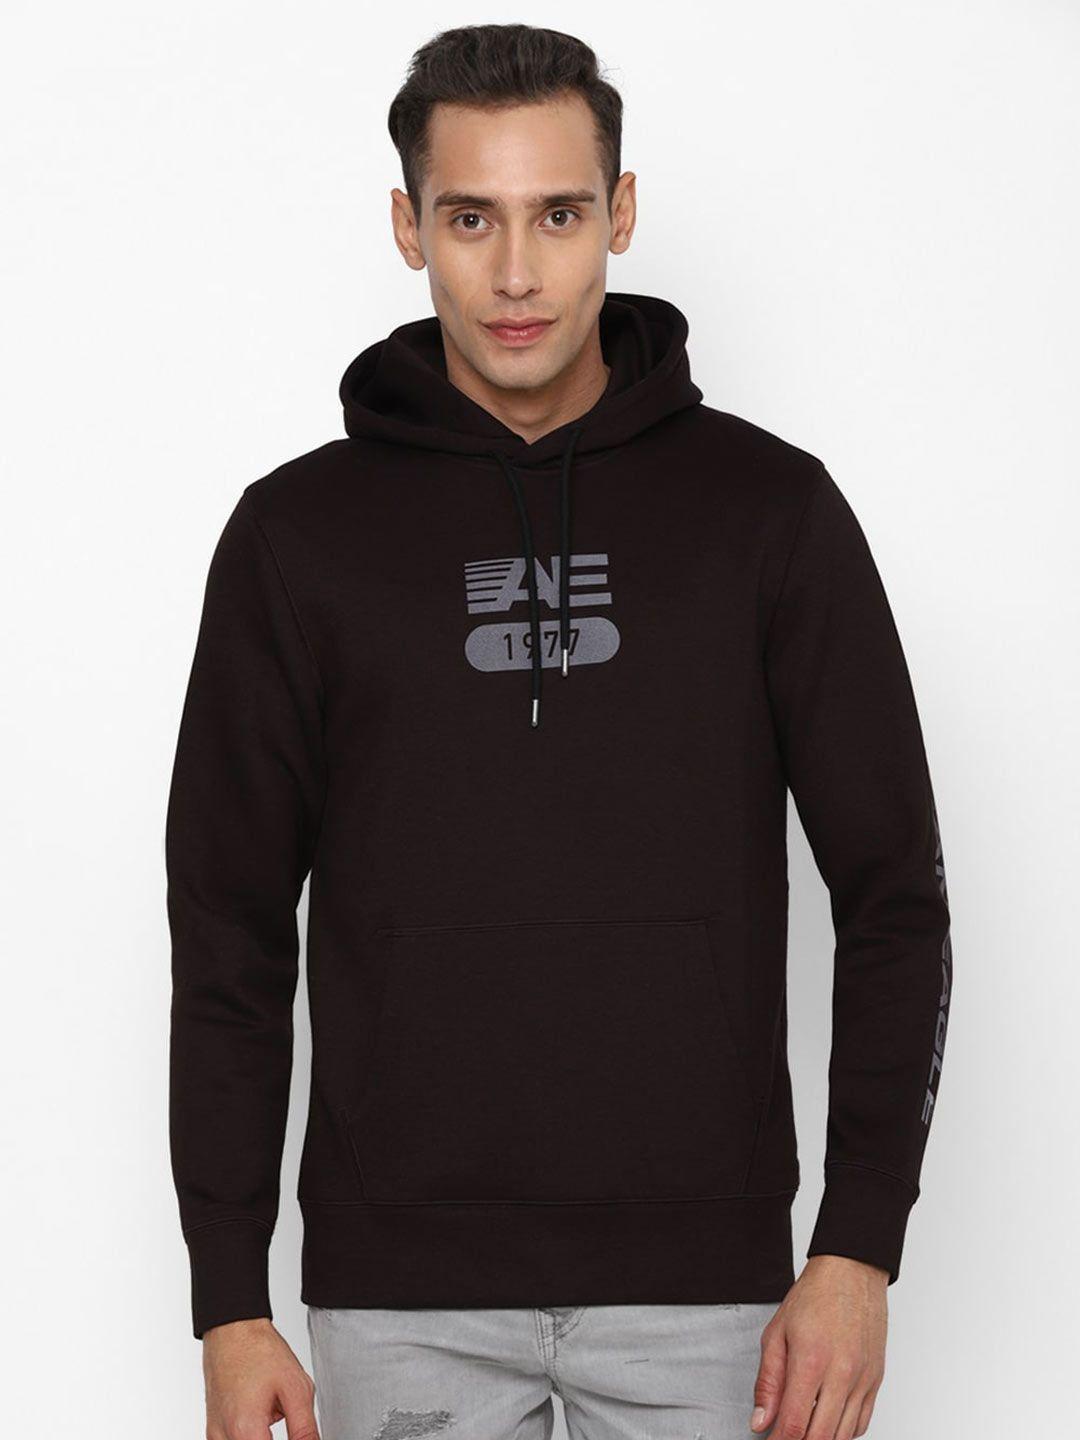 american-eagle-outfitters-men-printed-hooded-sweatshirt